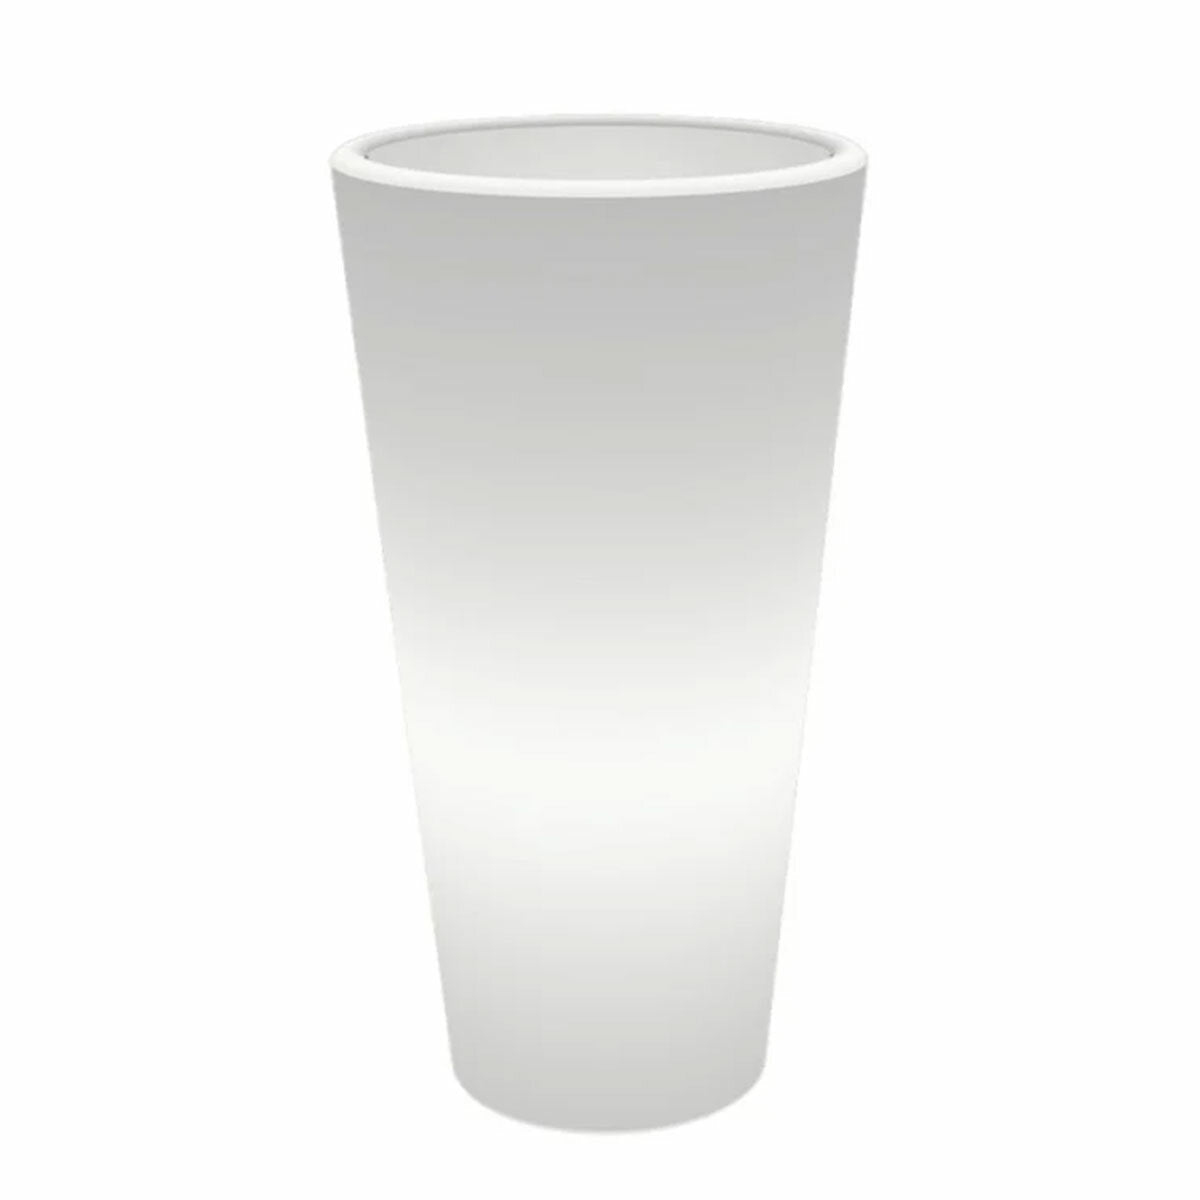 Arkema Tondo 102 SL round outdoor lighting vase